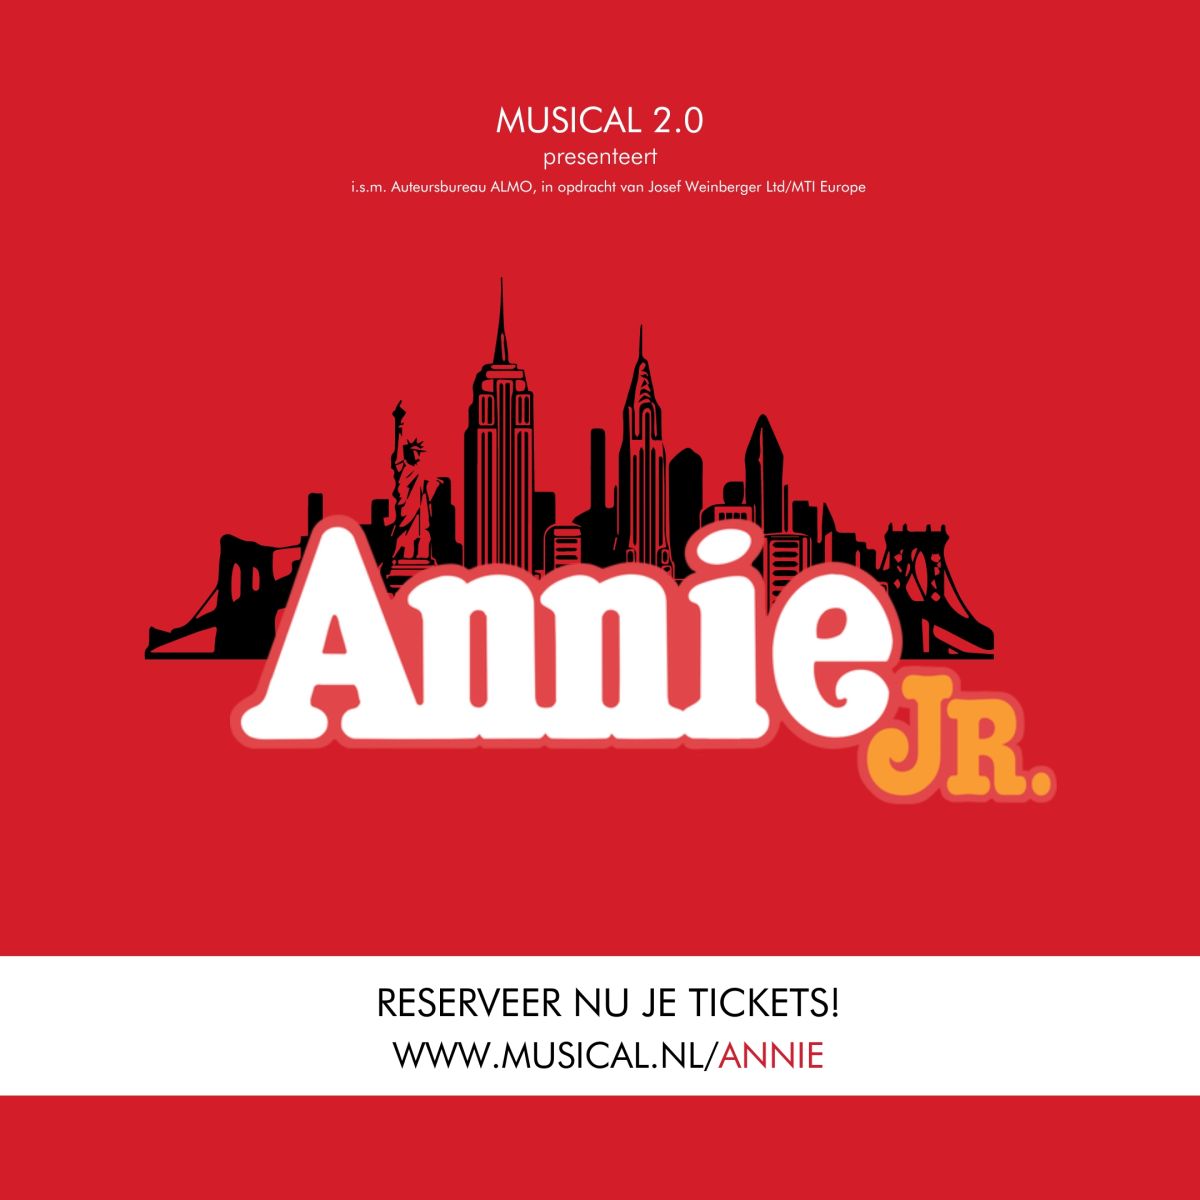 Annie jr - Beeldmerk - Musical 2.0